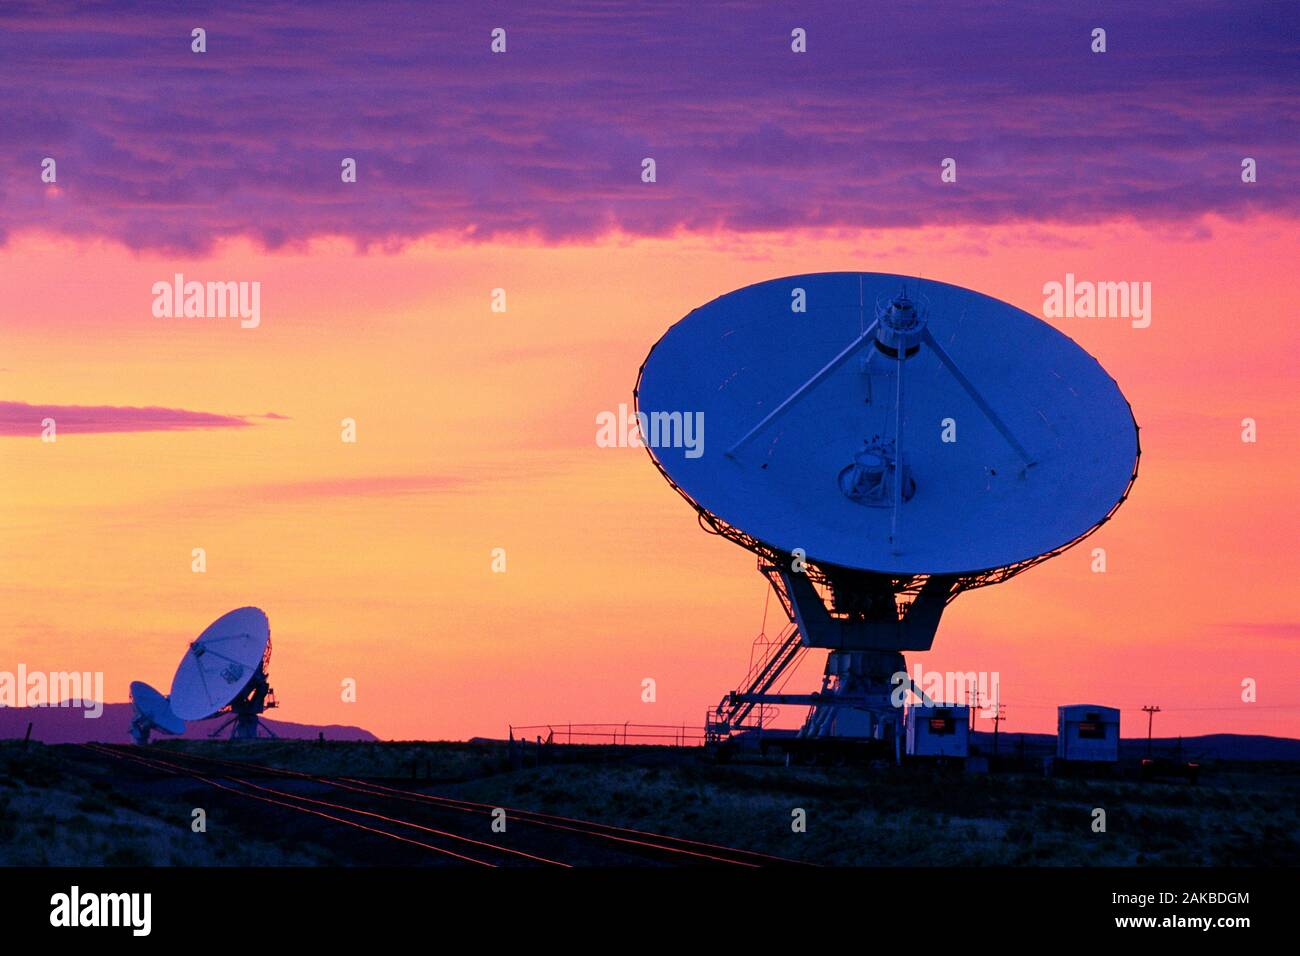 VLA Radio Telescope against sky at sunset, New Mexico, USA Stock Photo